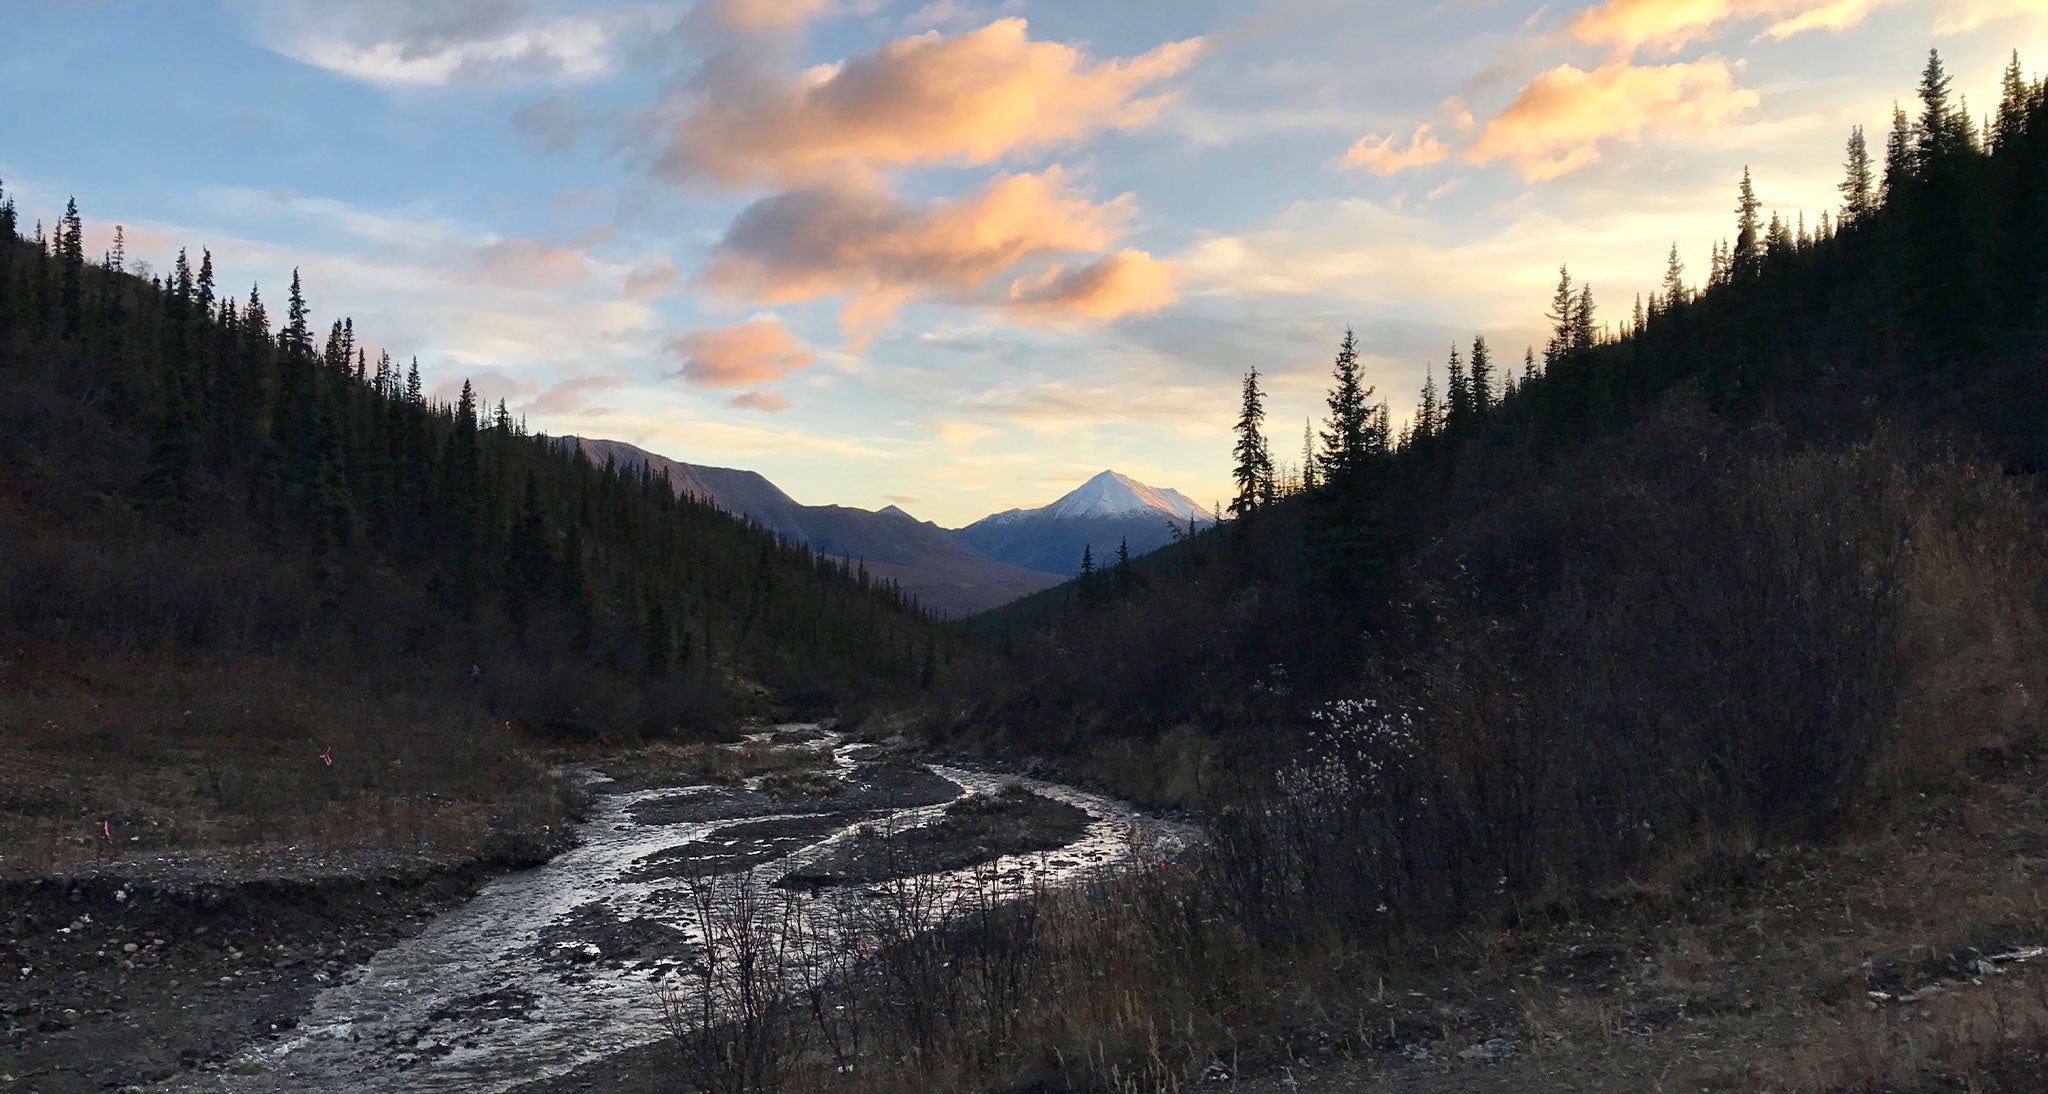 Alaska's cenral Brooks Range